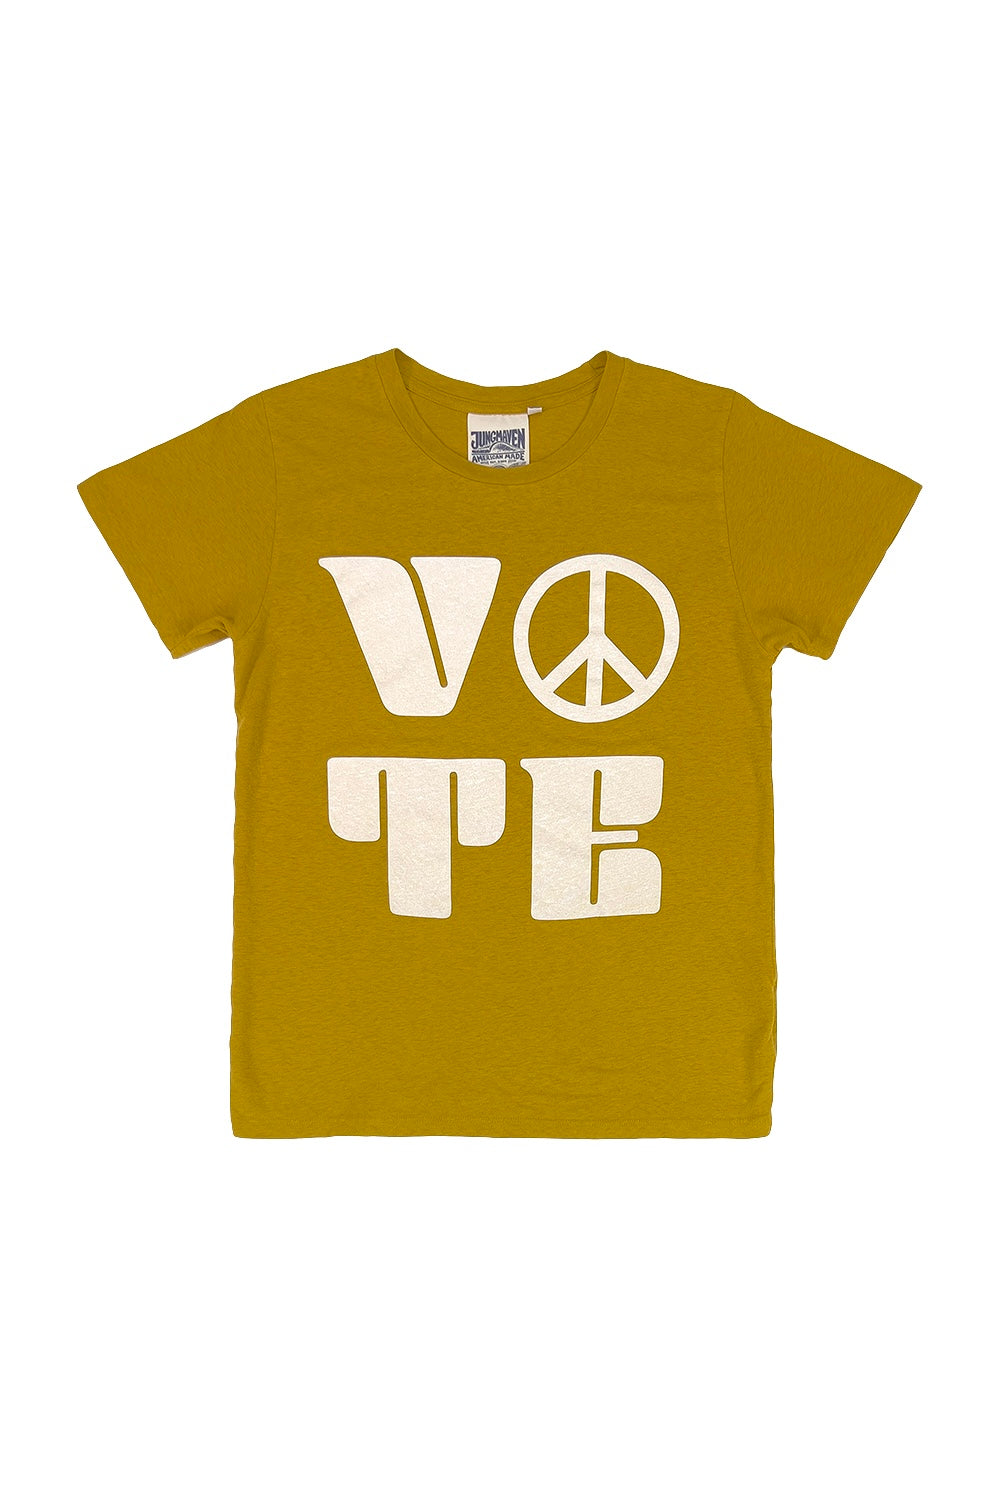 Vote Peace Lorel Tee | Jungmaven Hemp Clothing & Accessories / Color: Spicy Mustard